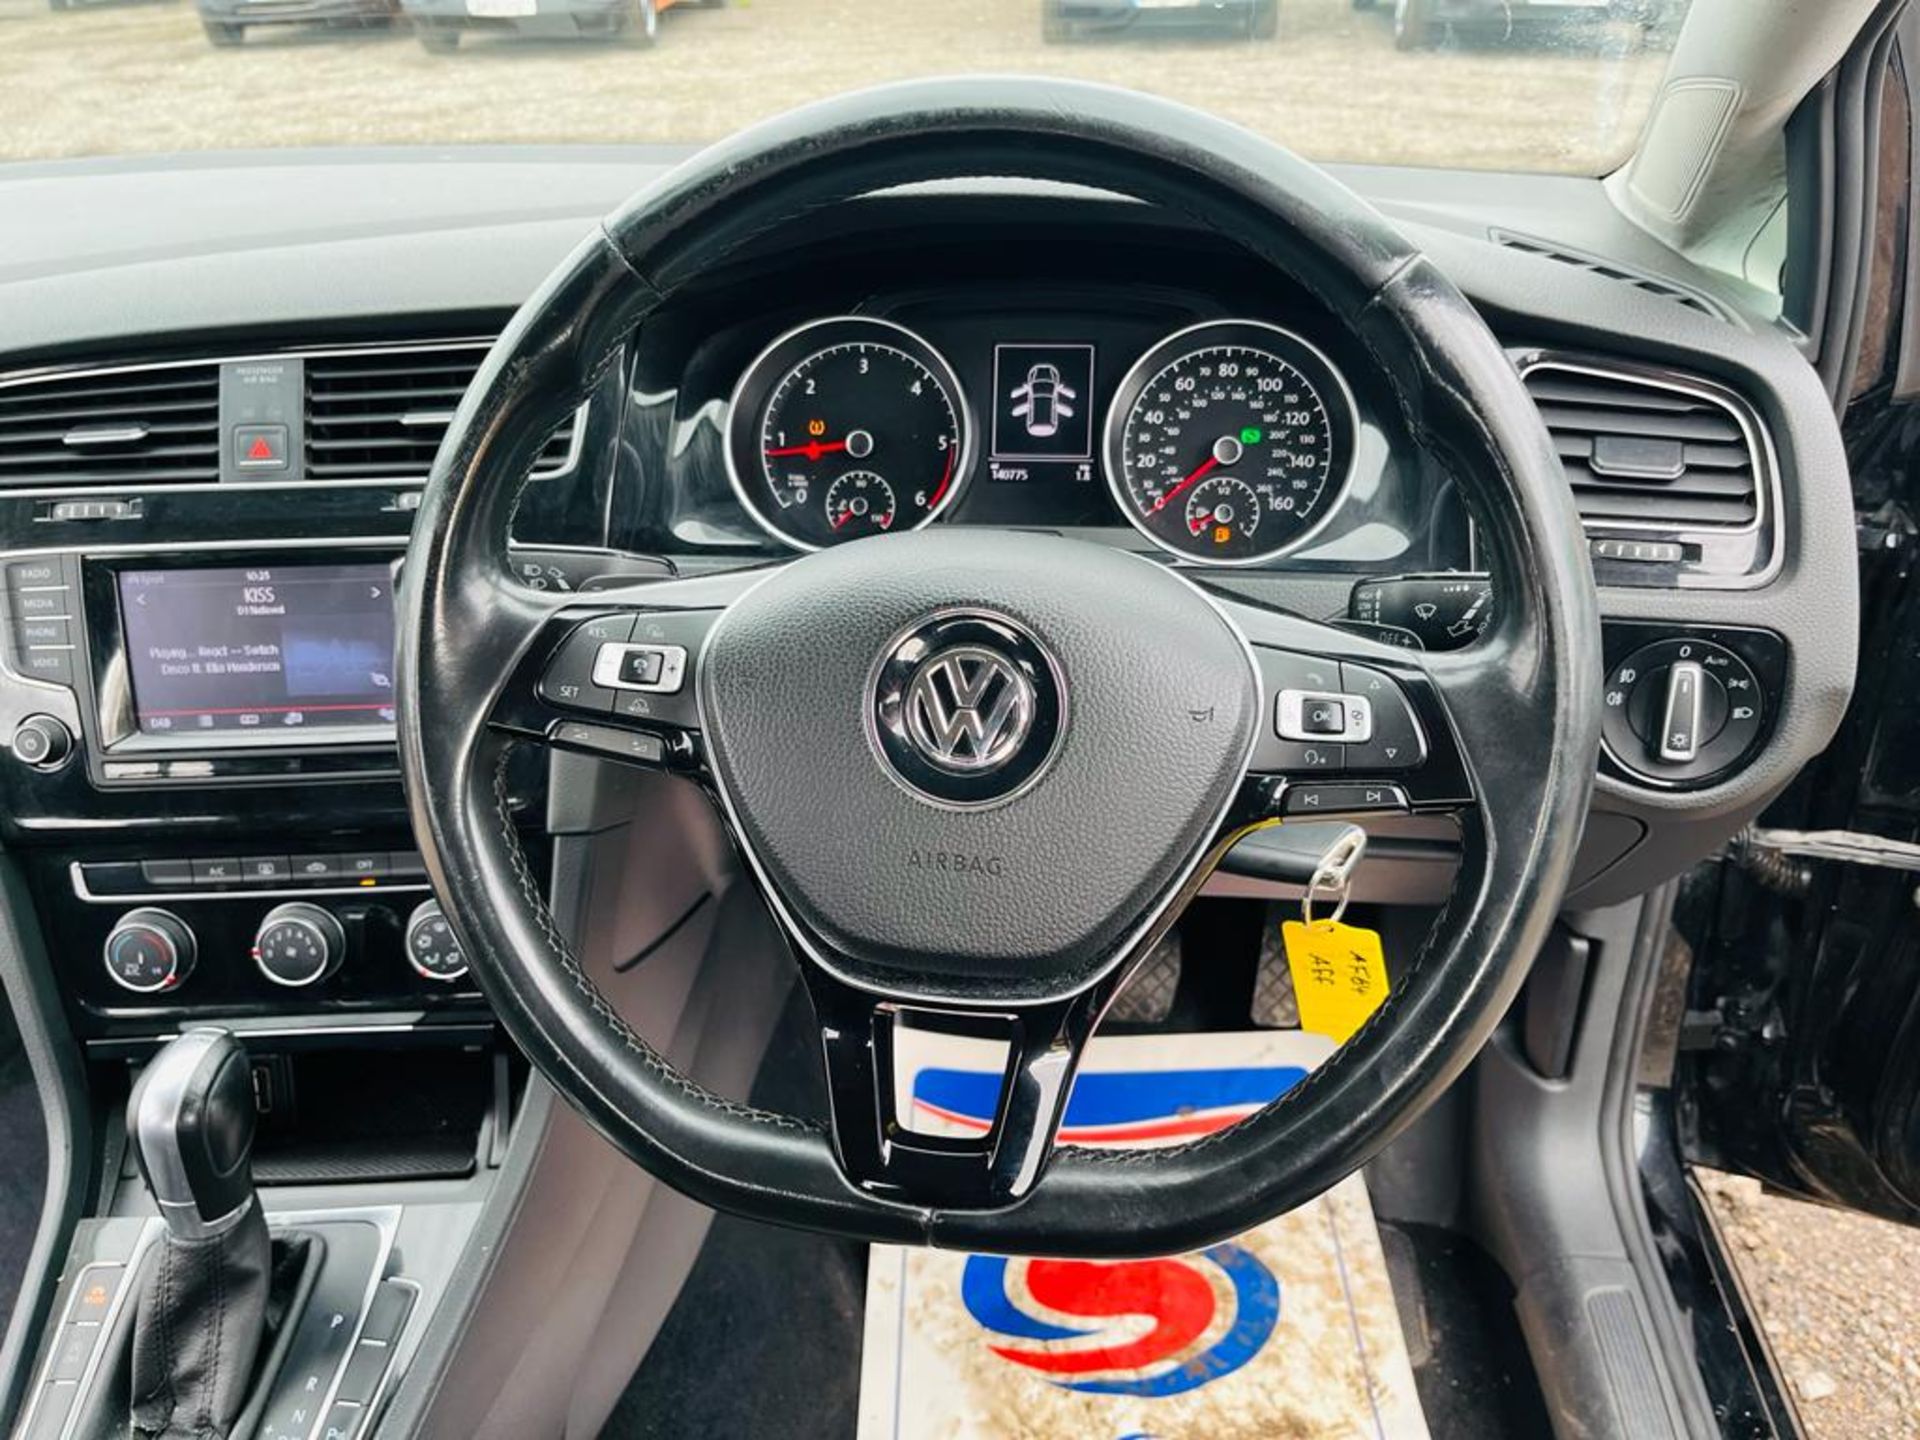 ** ON SALE ** Volkswagen Golf TDI 150 GT 2.0 2014 "64 Reg" - Touch Screen System - No Vat - Image 14 of 28